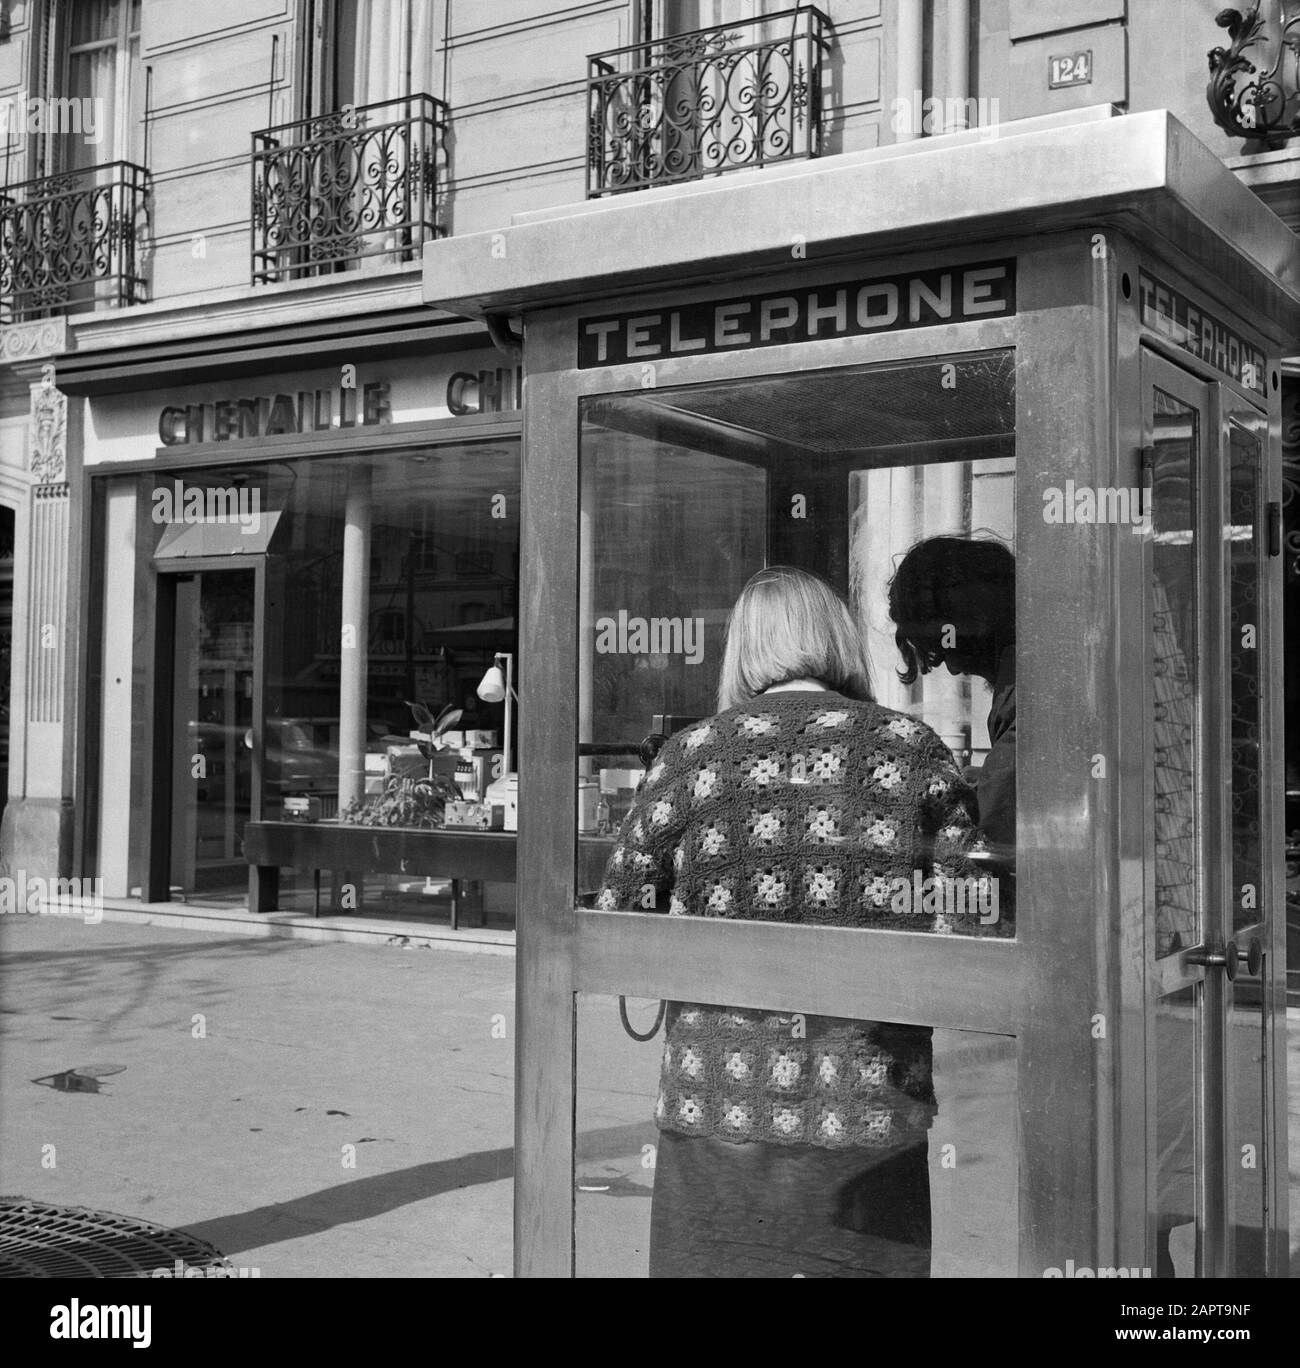 Pariser Bilder [The street life of Paris]  Use of a telephone booth Date: 1965 Location: France, Paris Keywords: street images, telephone booths Stock Photo